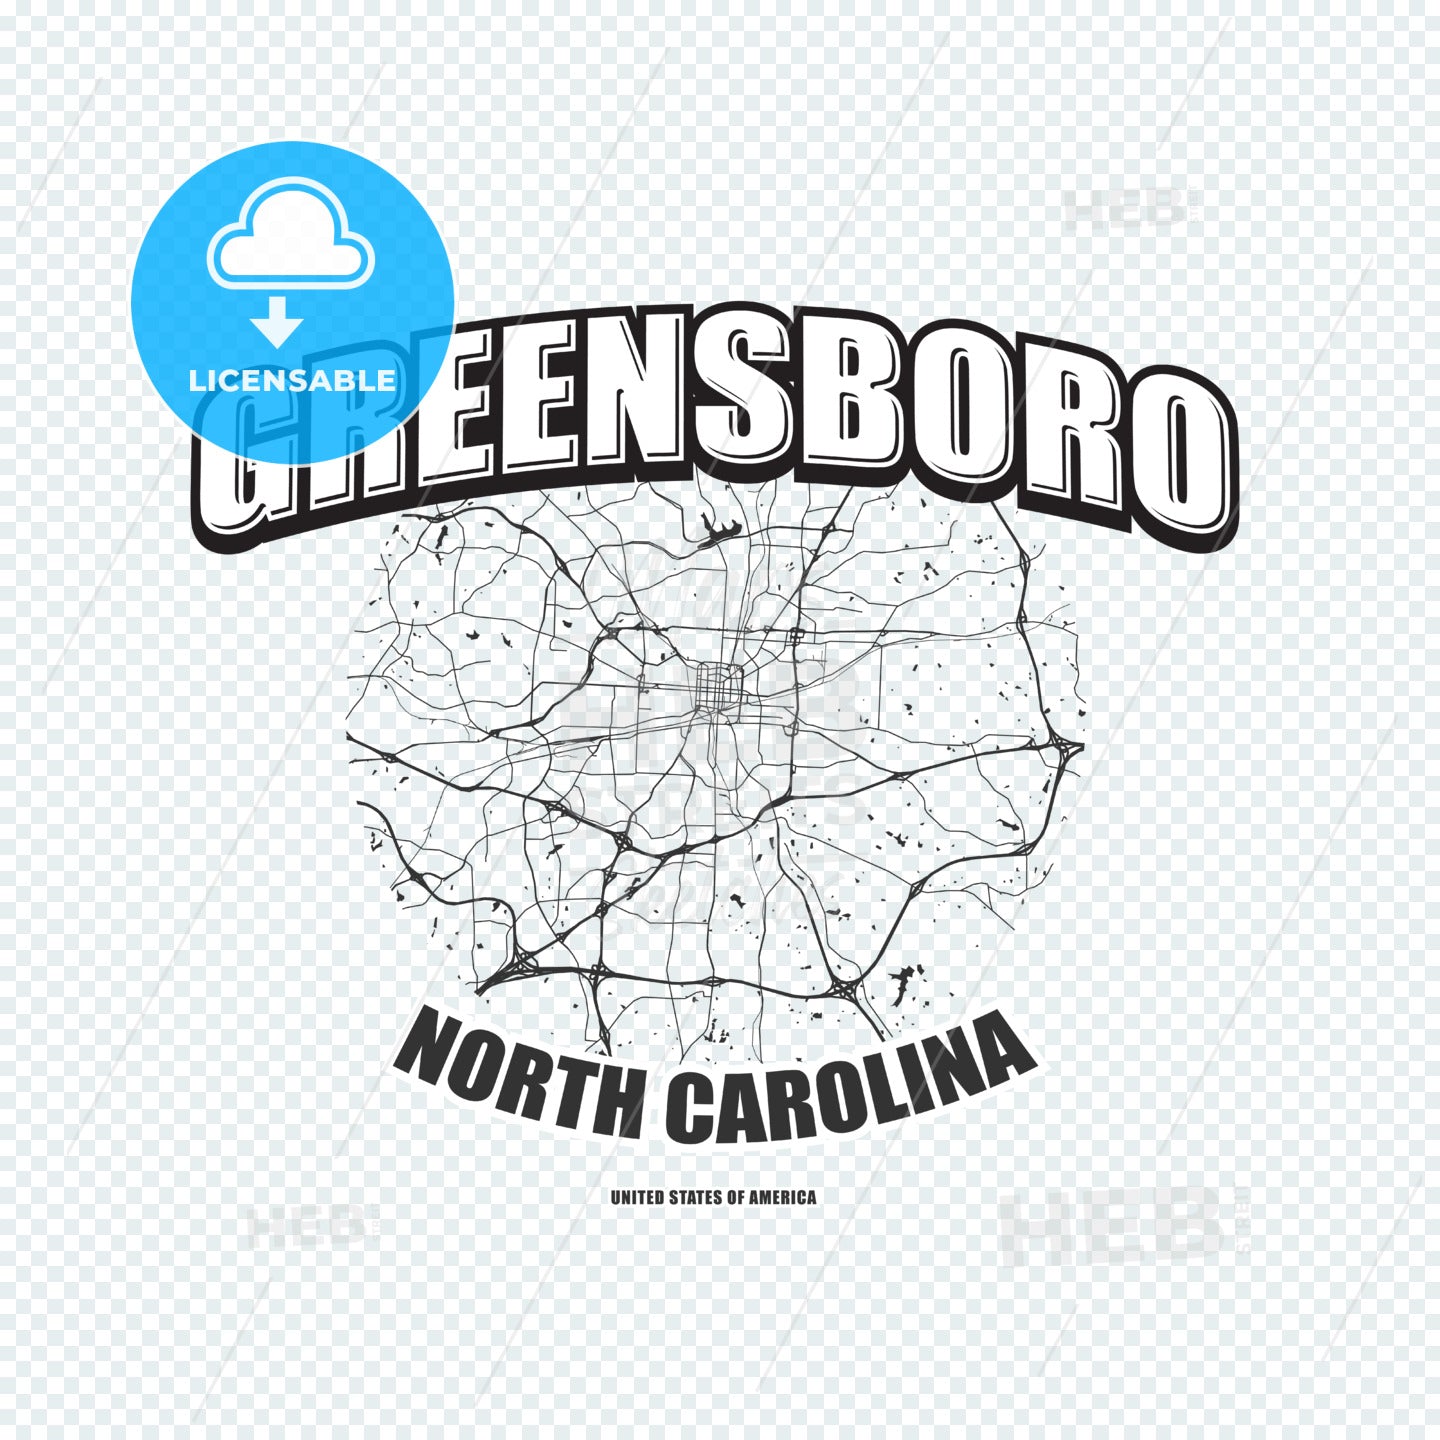 Greensboro, North Carolina, logo artwork – instant download